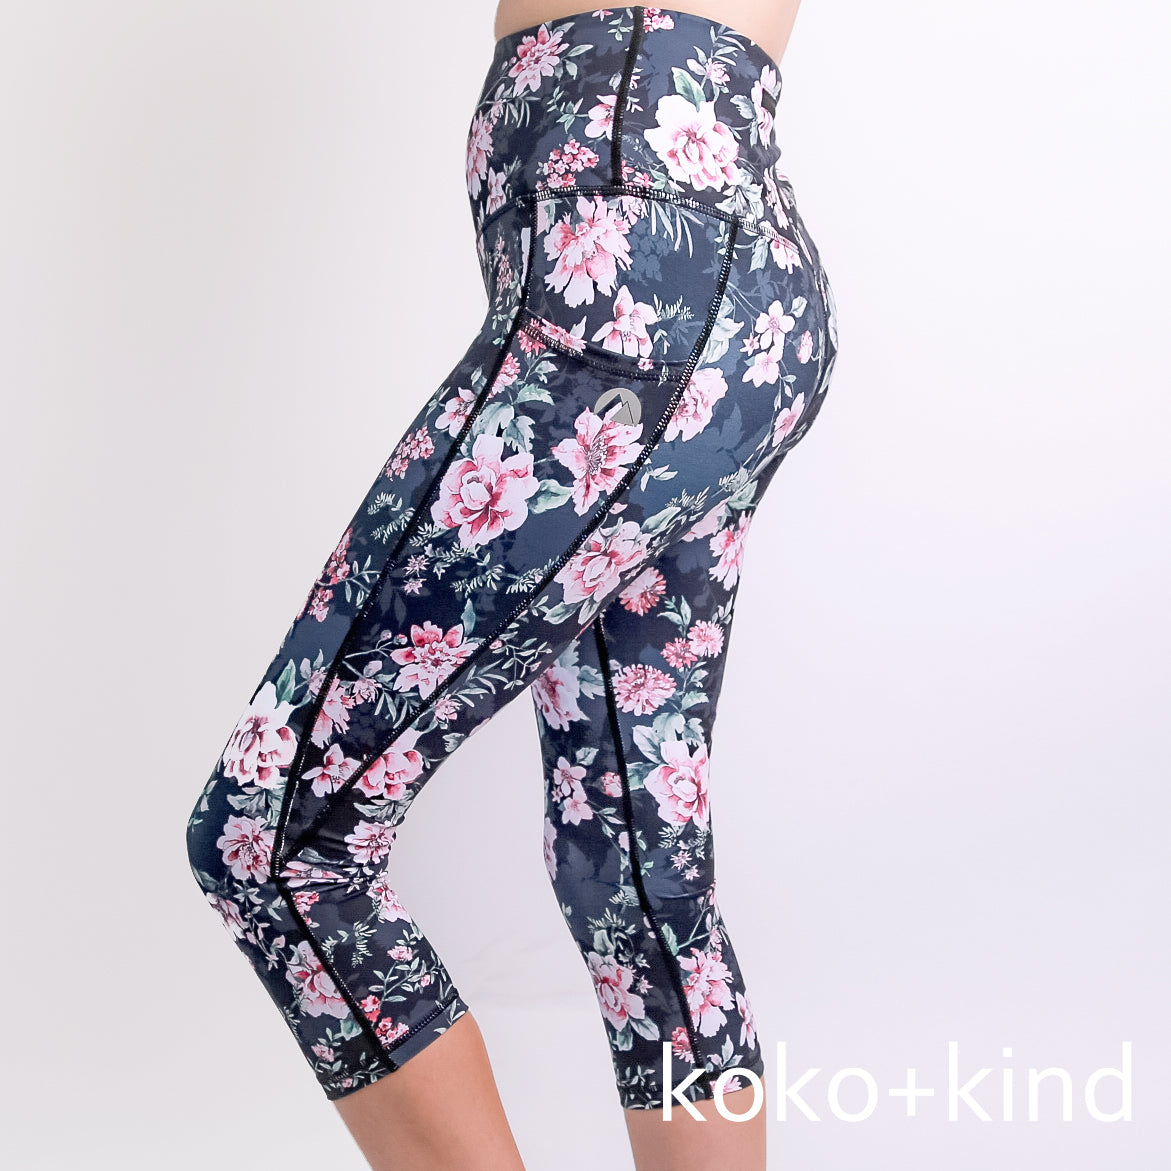 New APANA Floral Print High Waist Women's XS XSmall Capri Yoga Pants  Leggings